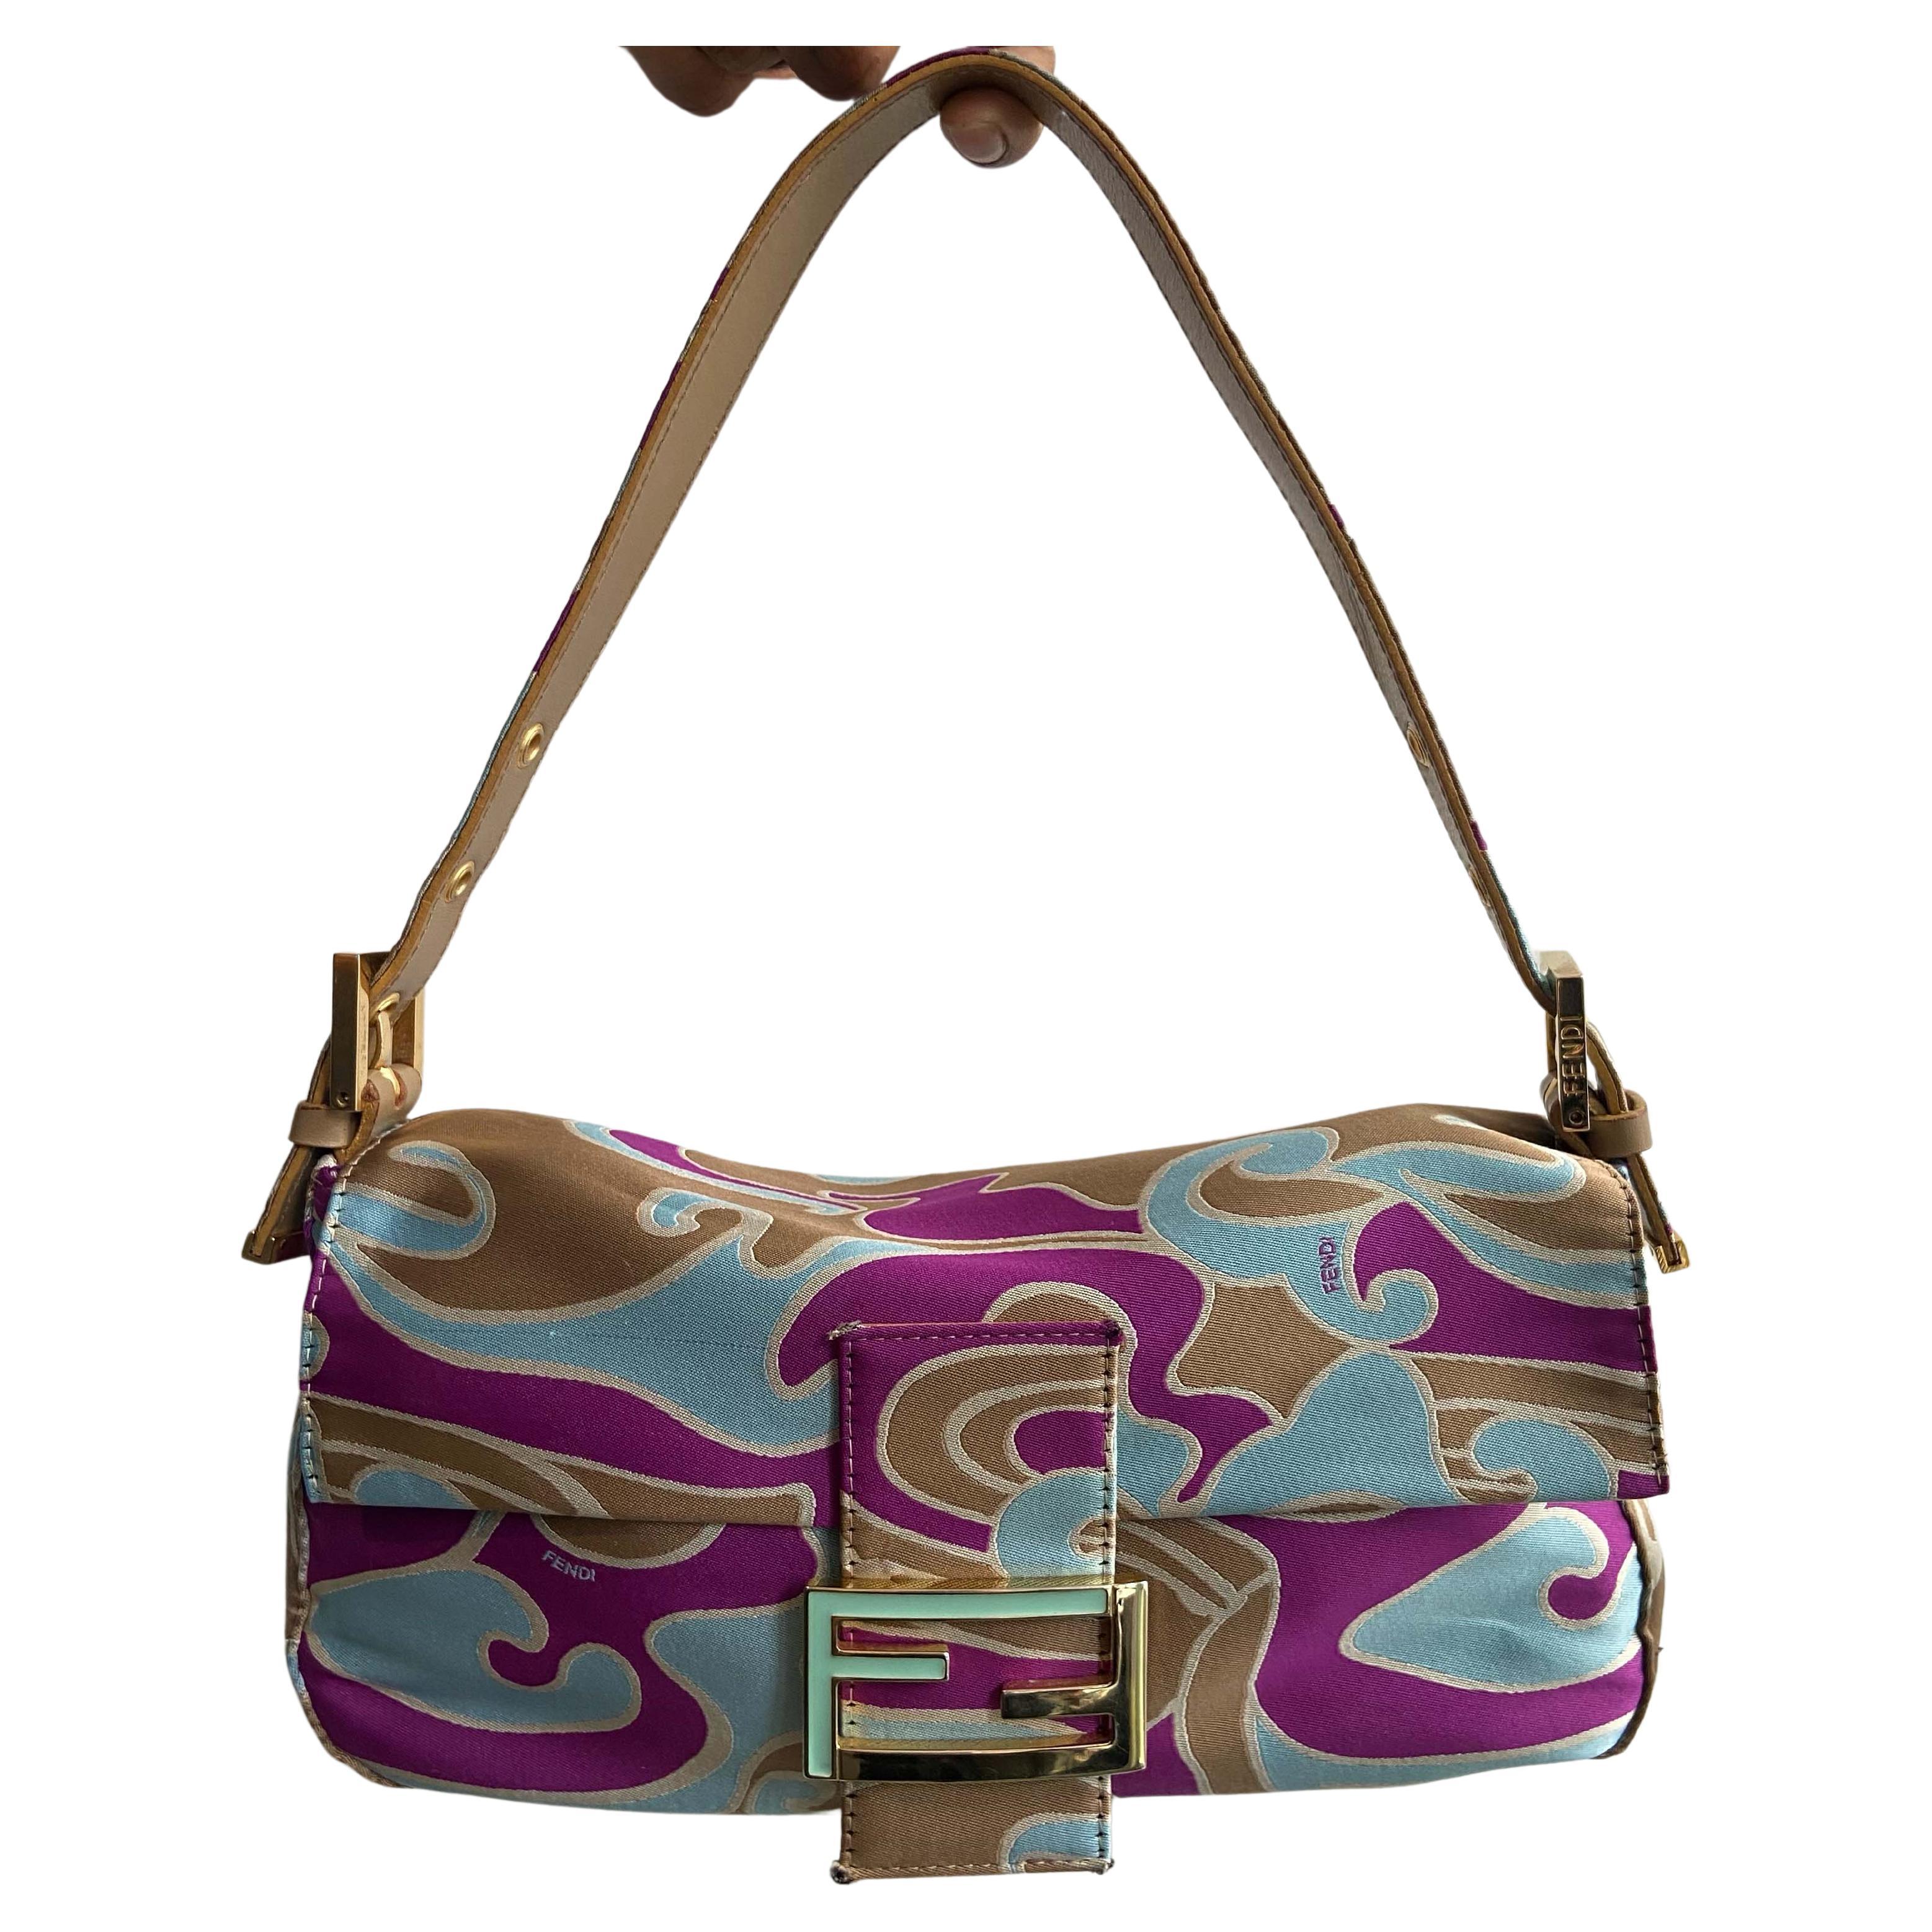 Where can I buy used Fendi handbags?